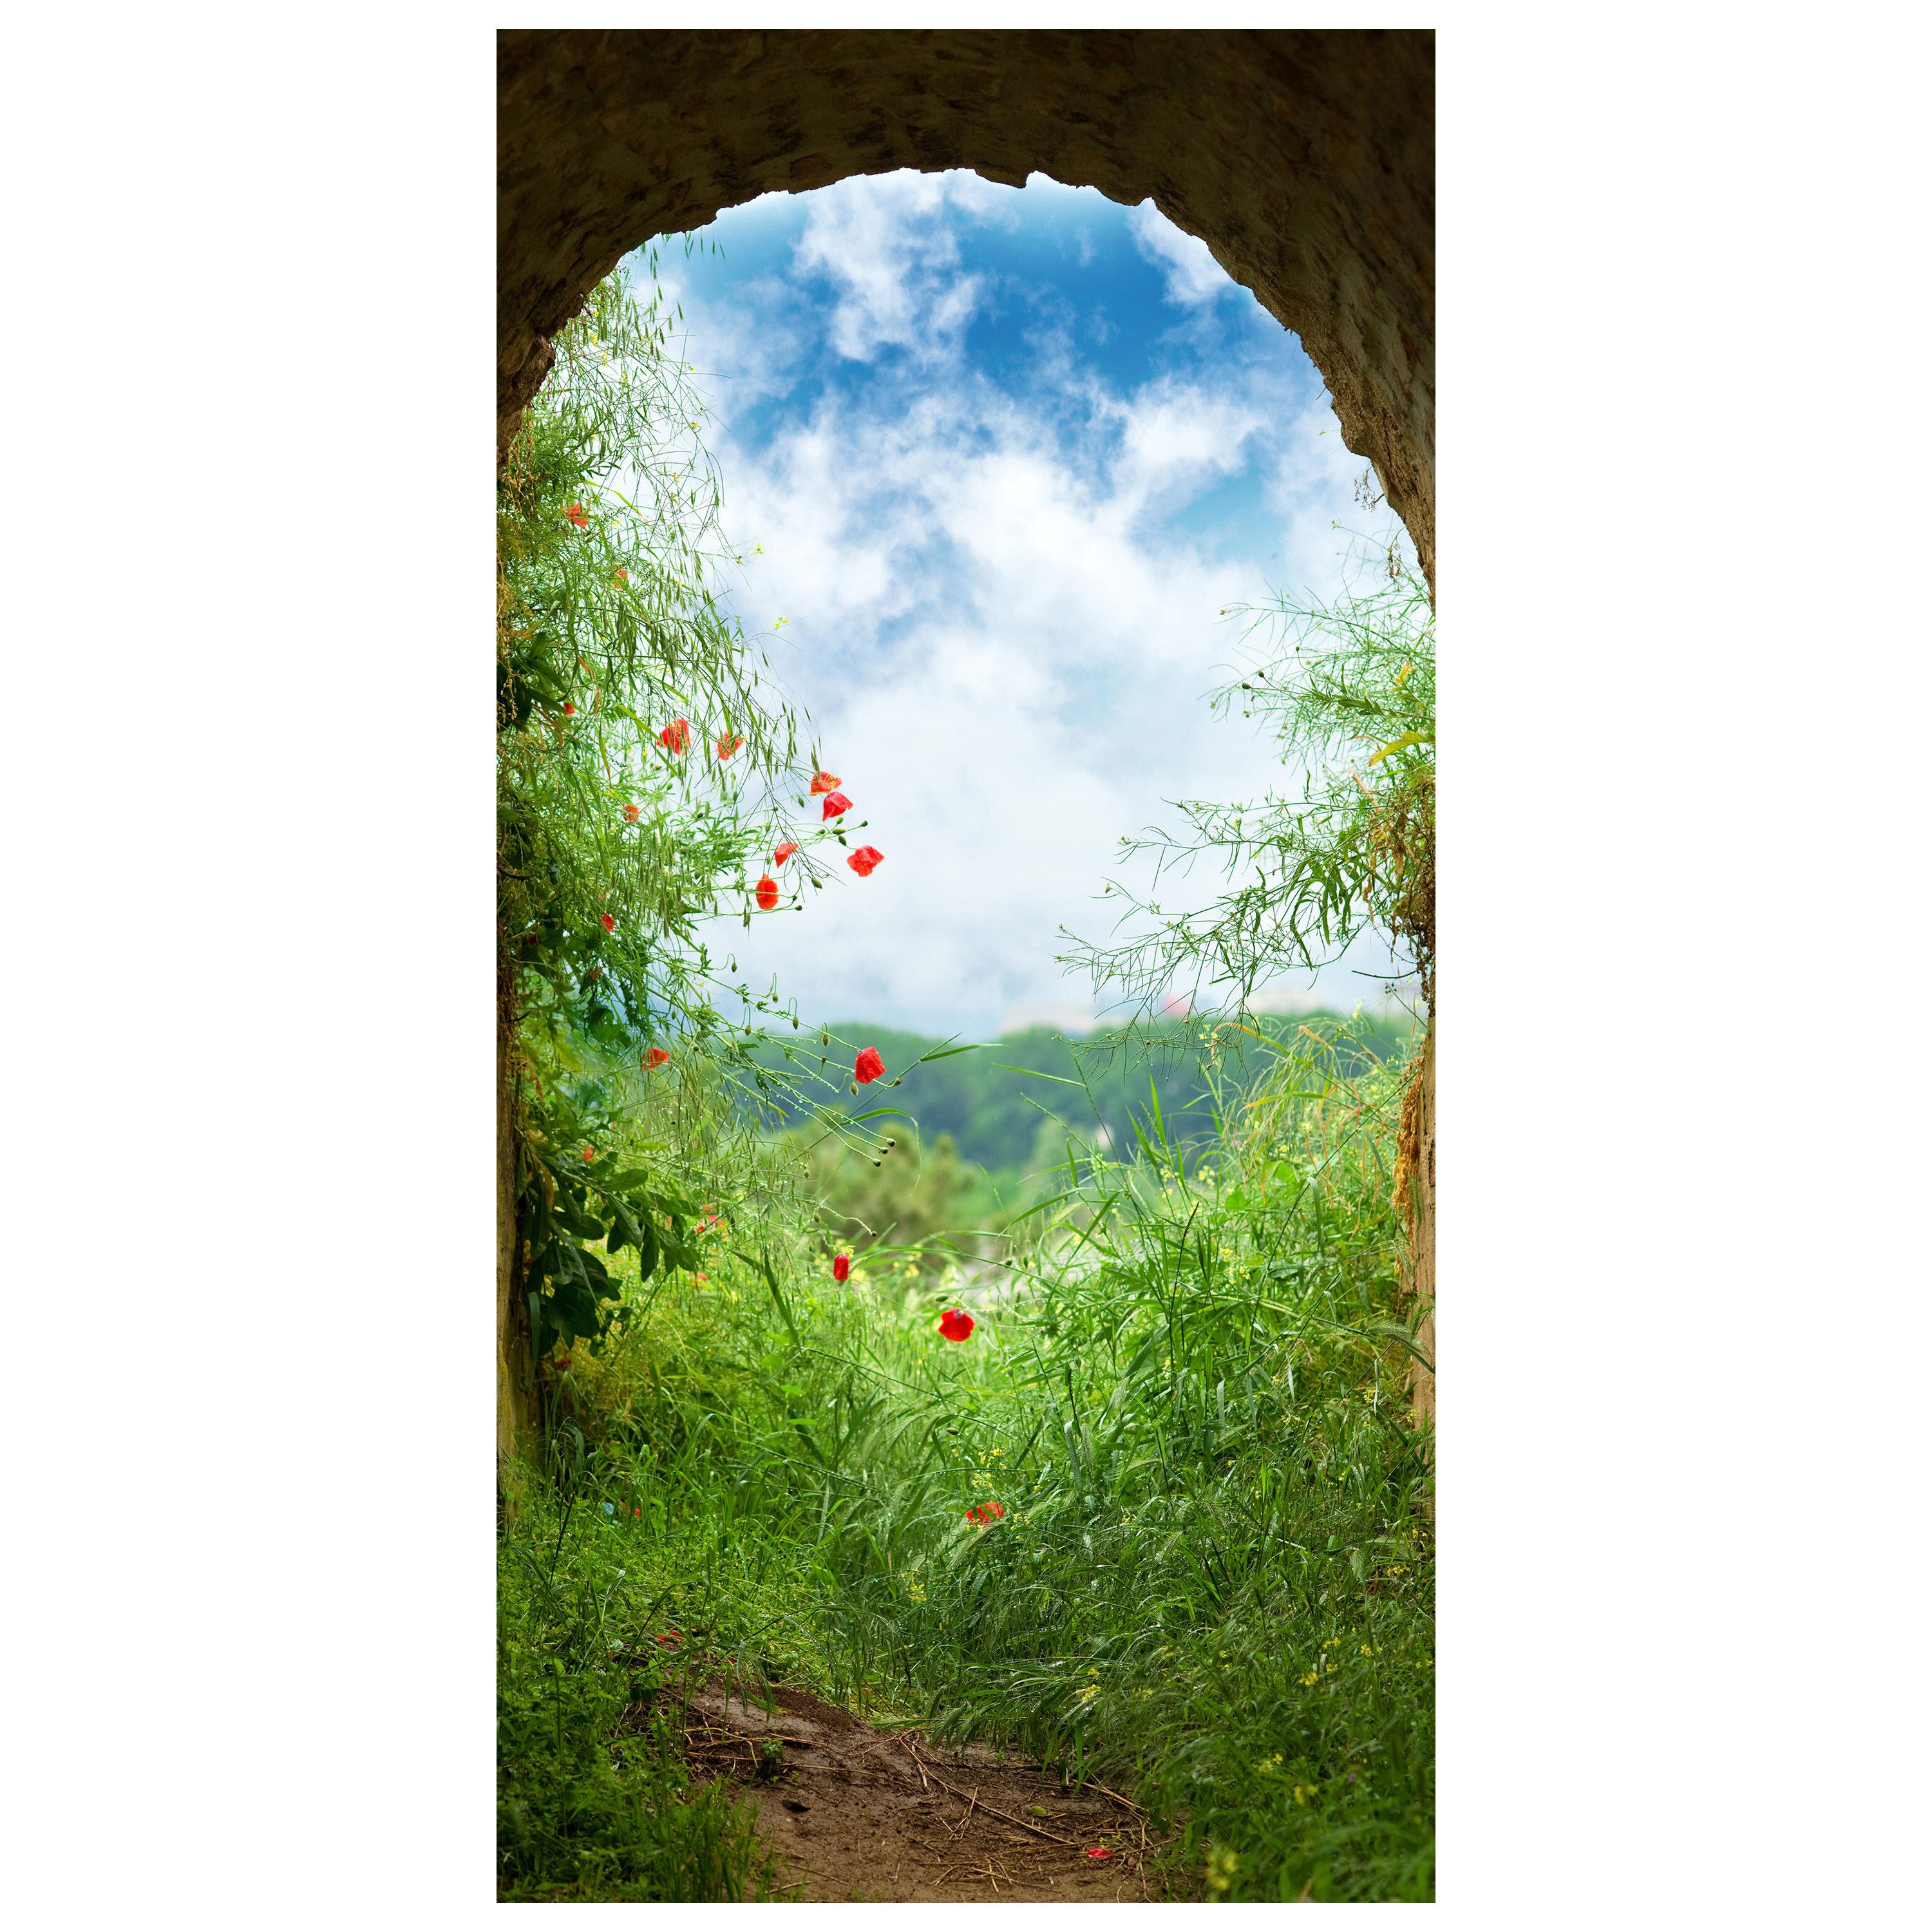 wandmotiv24 Türtapete Blick aus Tunnel, Wiese, Natur, Blumen, glatt, Fototapete, Wandtapete, Motivtapete, matt, selbstklebende Dekorfolie